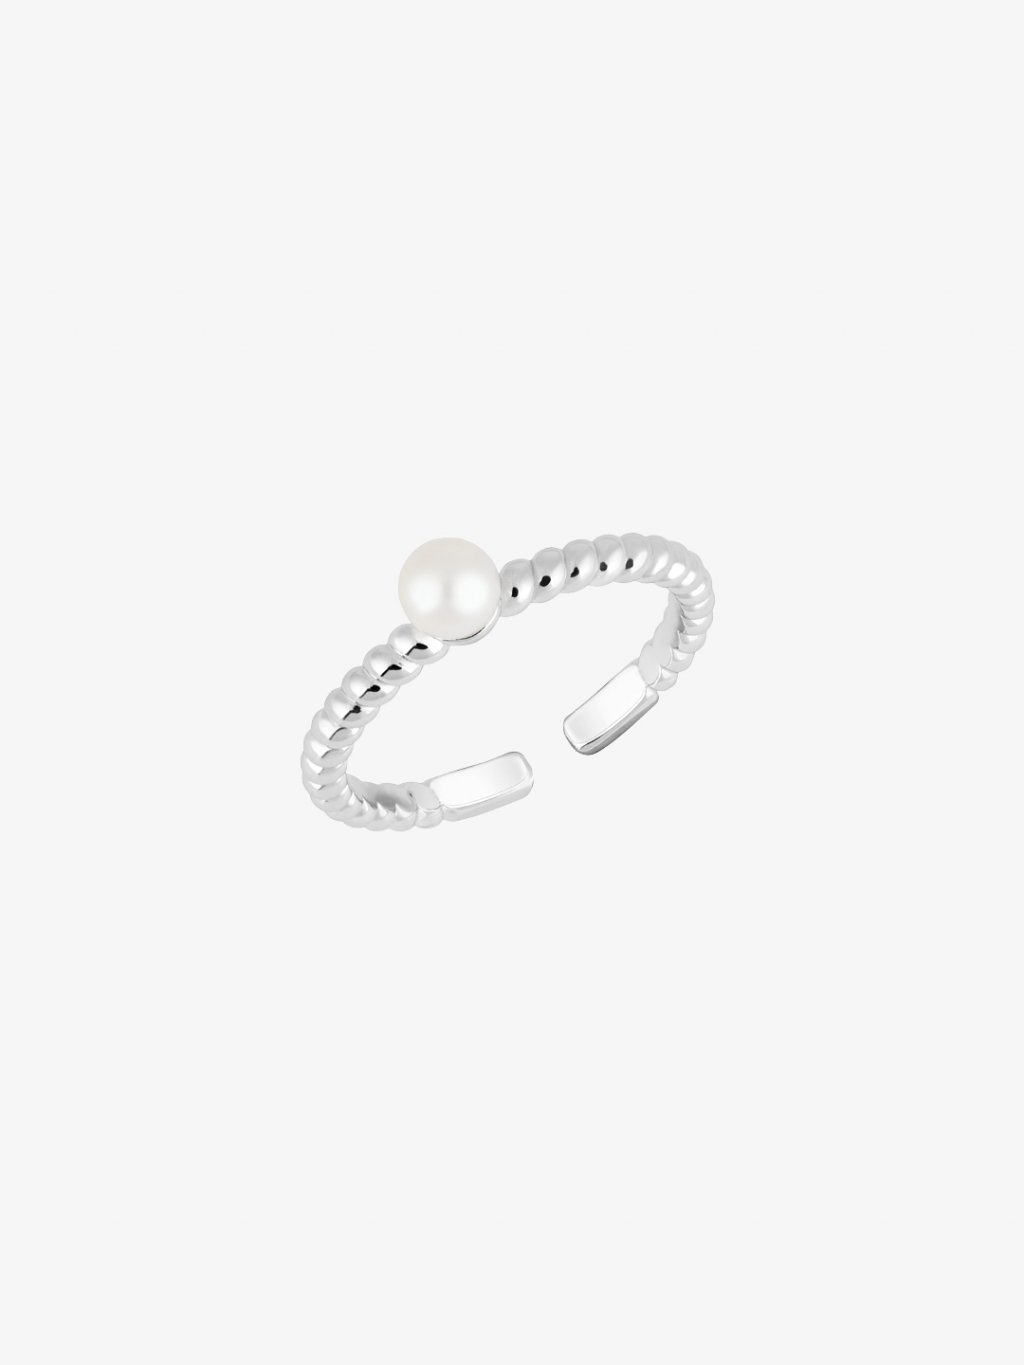 Stříbrný prsten Pearl Passion s říční perlou Preciosa 6158 01B Velikost a váha prstenu: 52-55